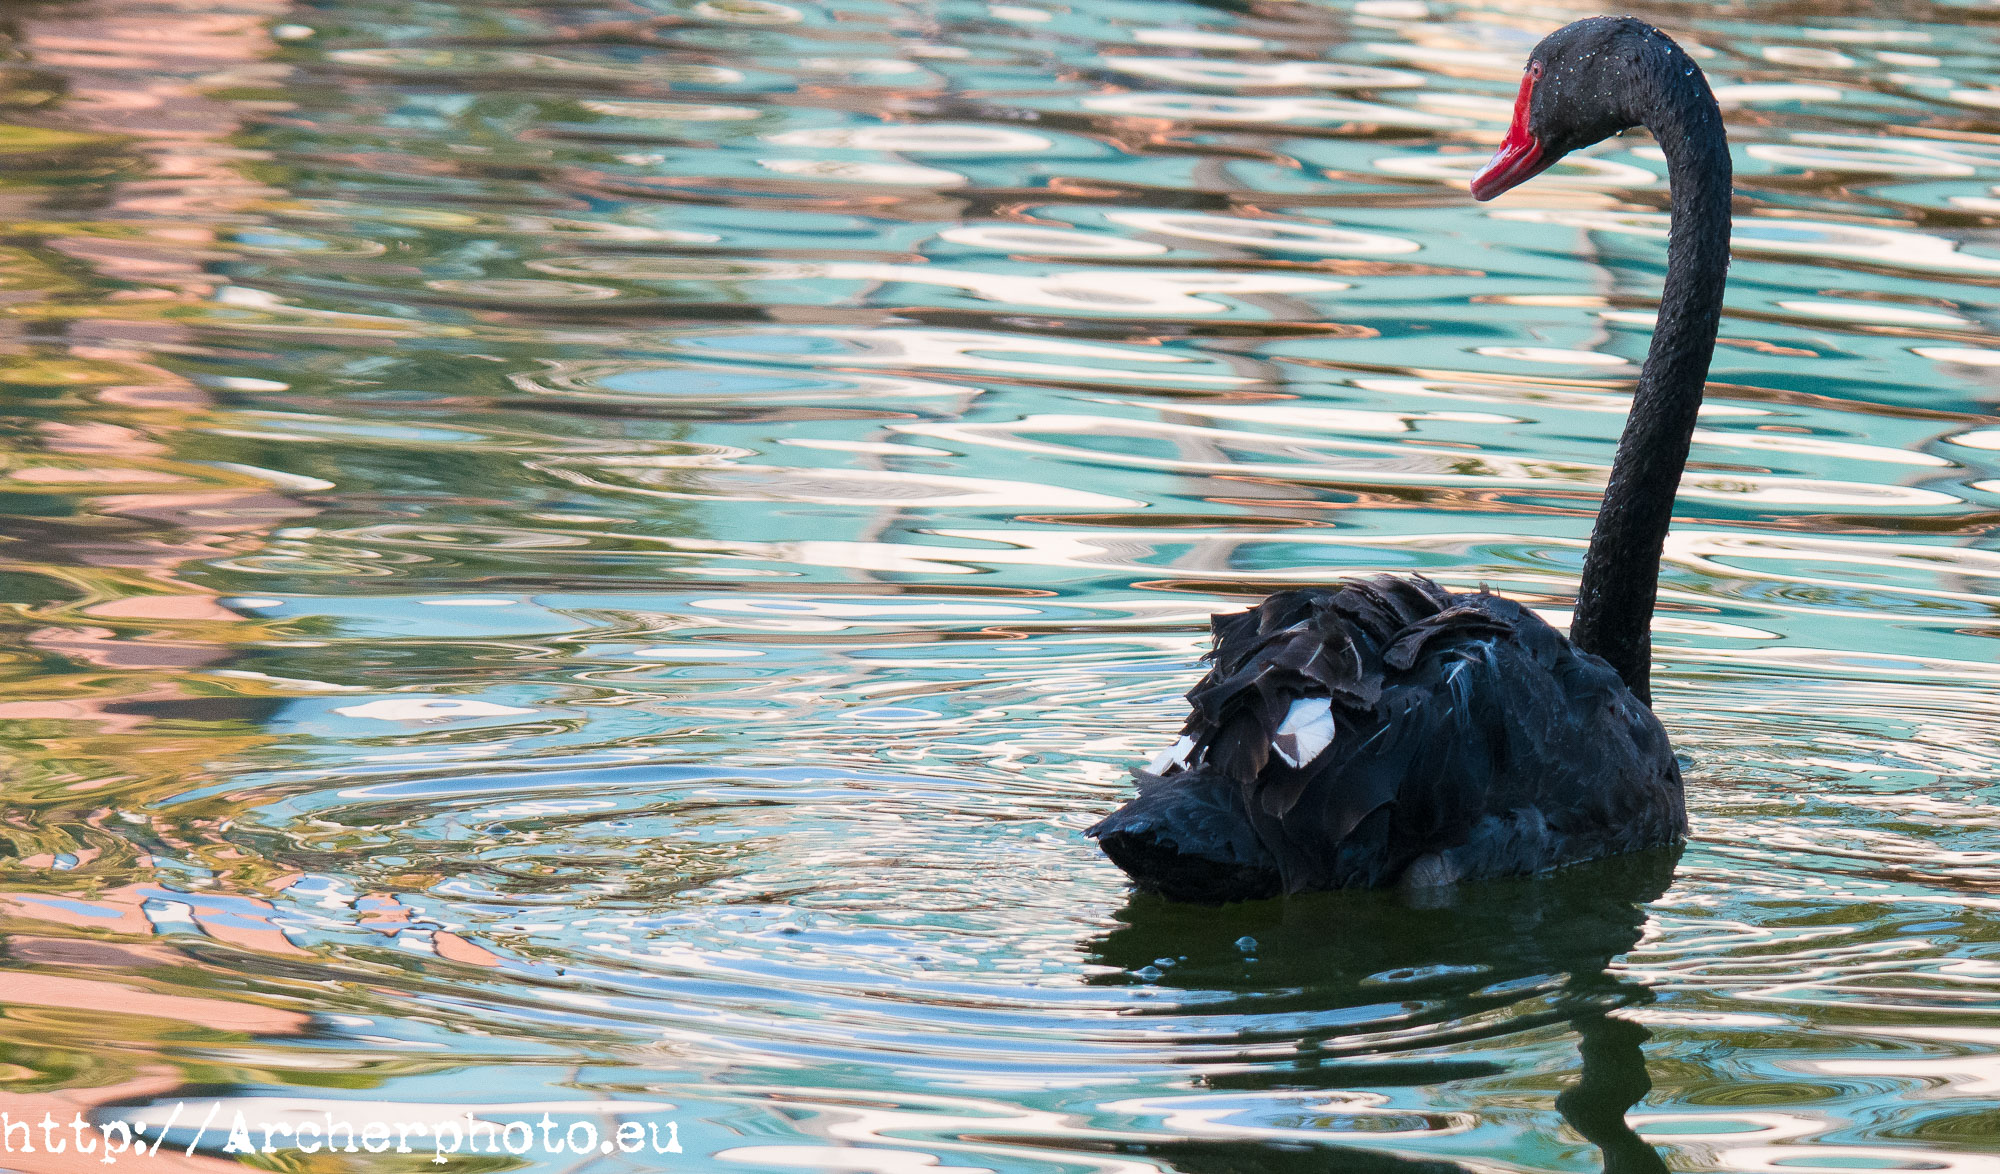 cisne negro por archerphoto fotógrafo valencia